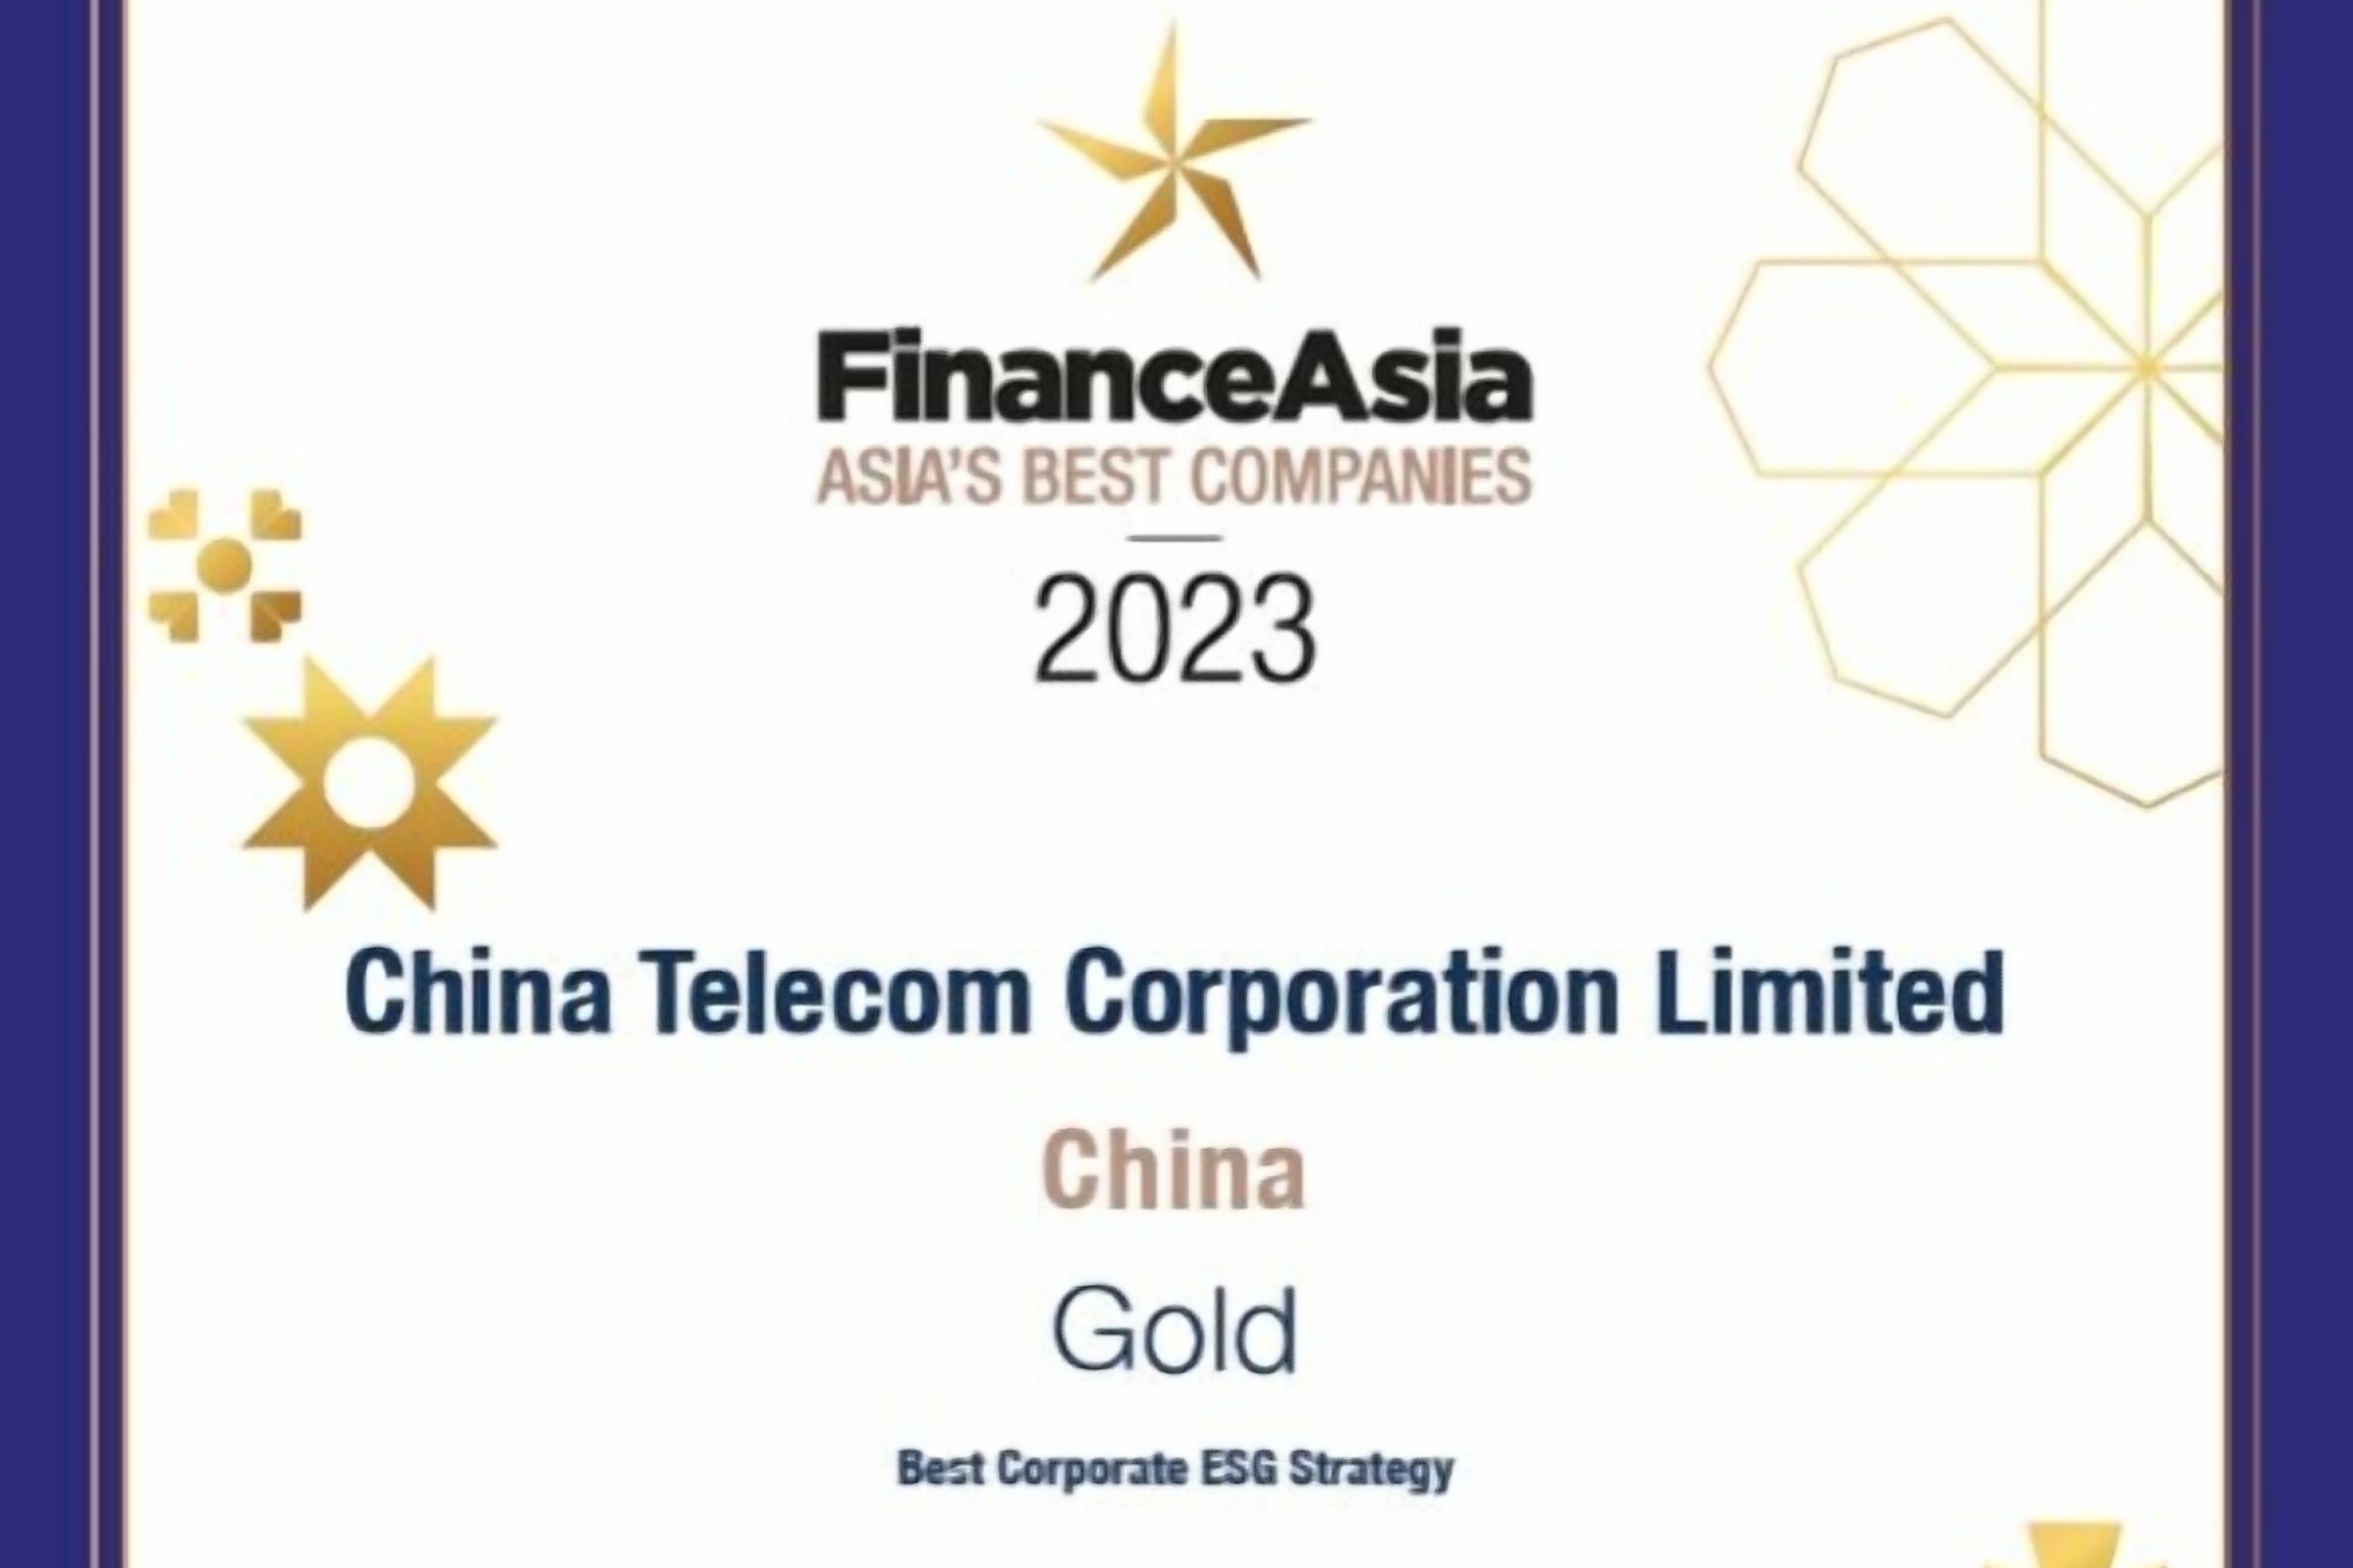 KnowESG_China Telecom, best corporate ESG strategy